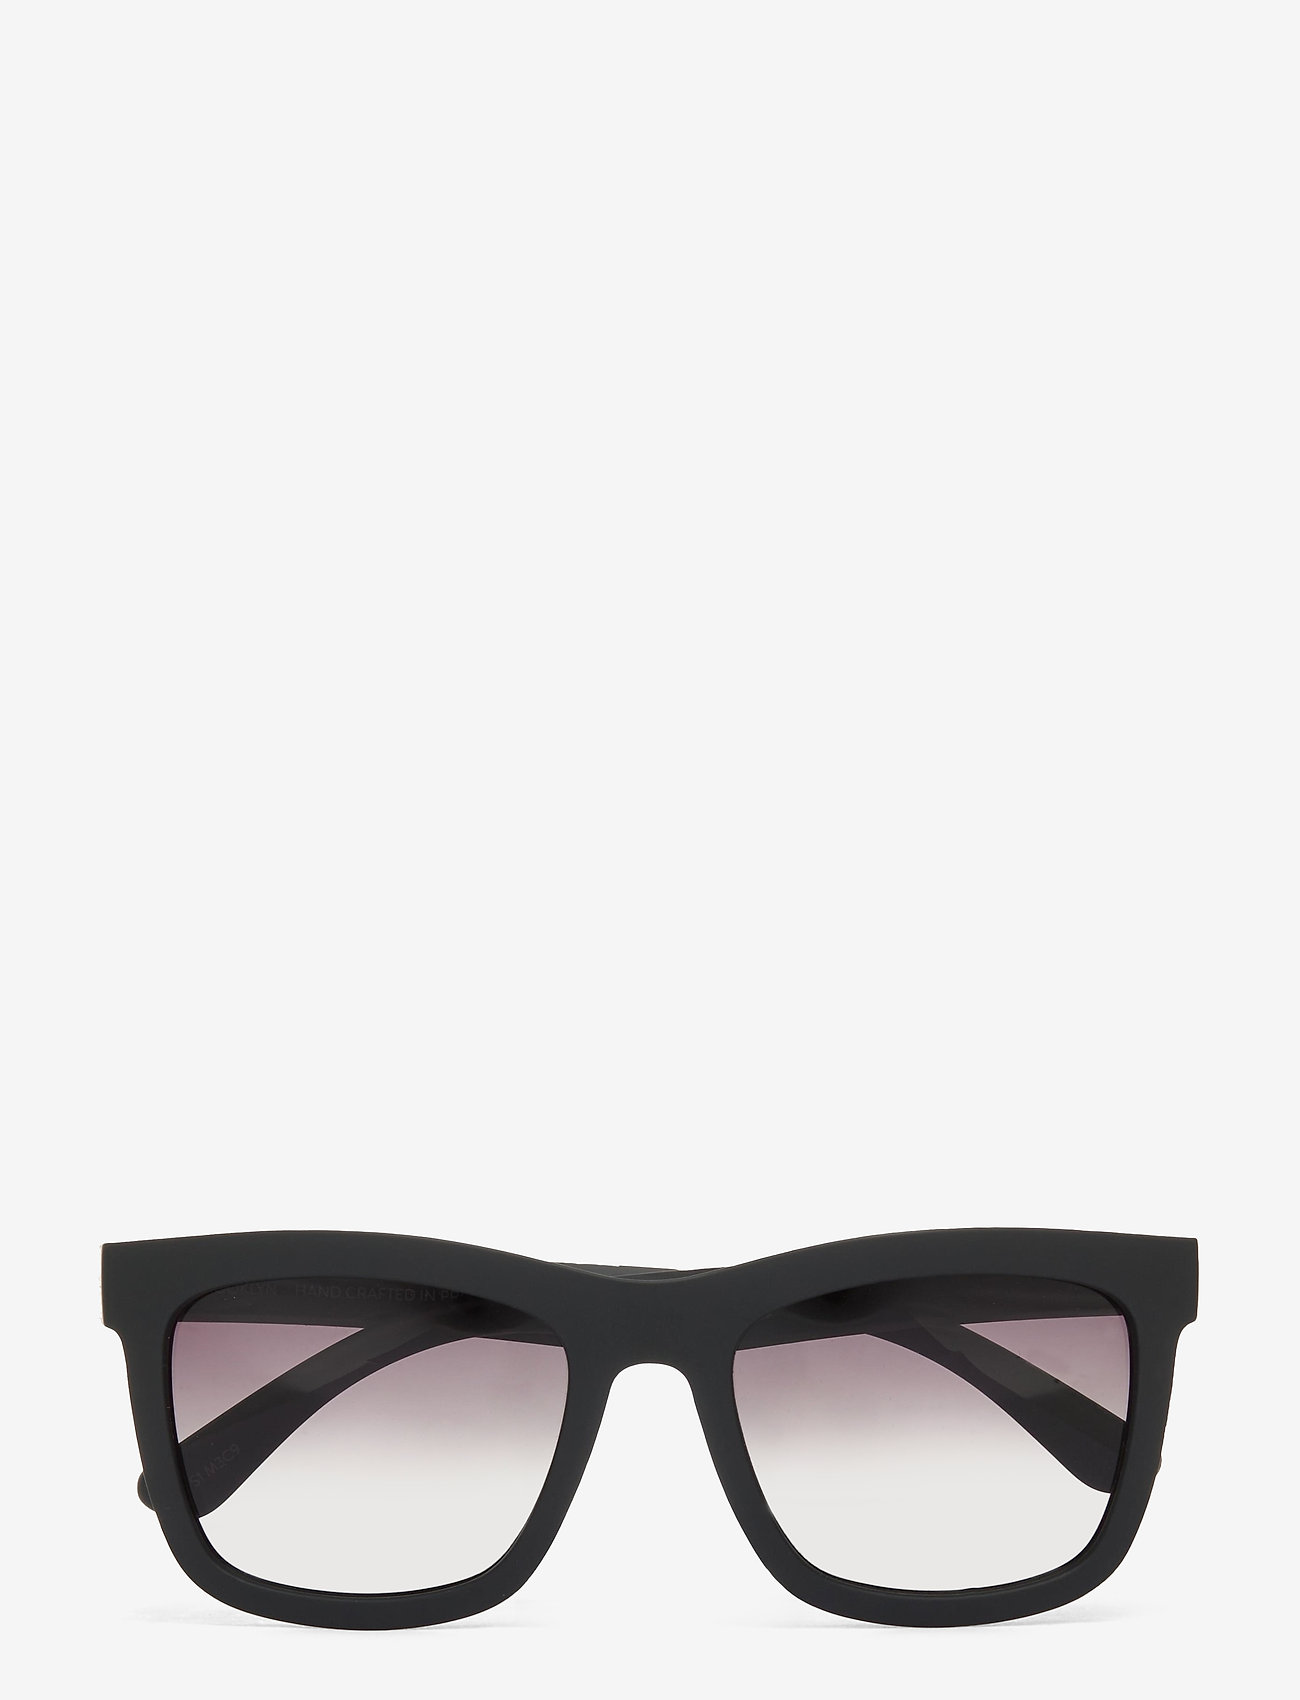 MessyWeekend - BROOKLYN - d-shaped solbriller - matte black - 0